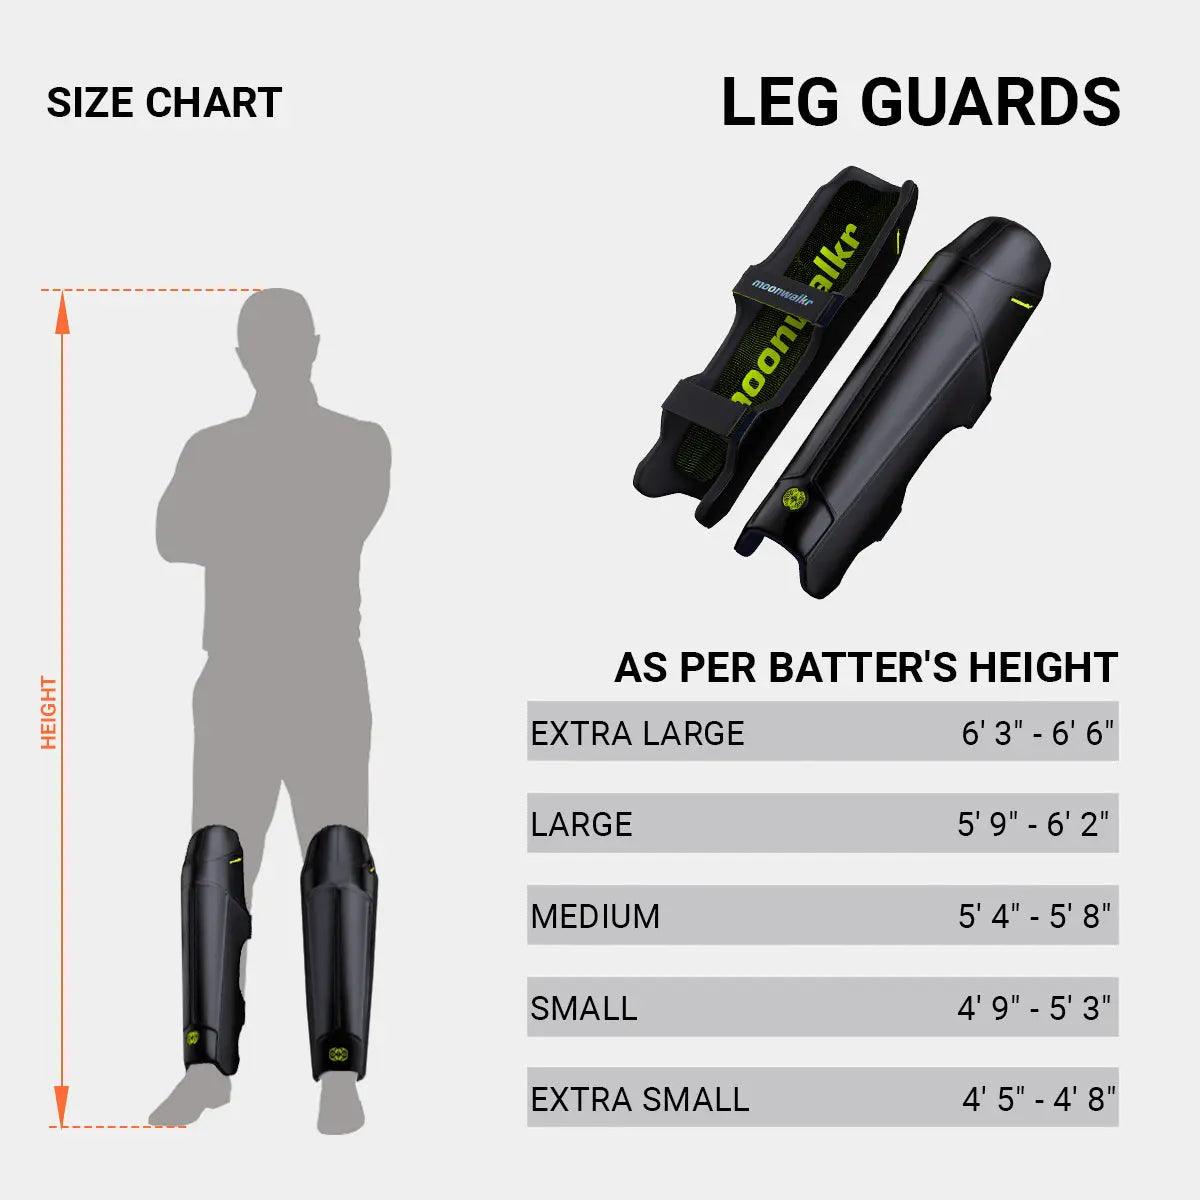 Leg Guards 2.0 moonwalkrindia